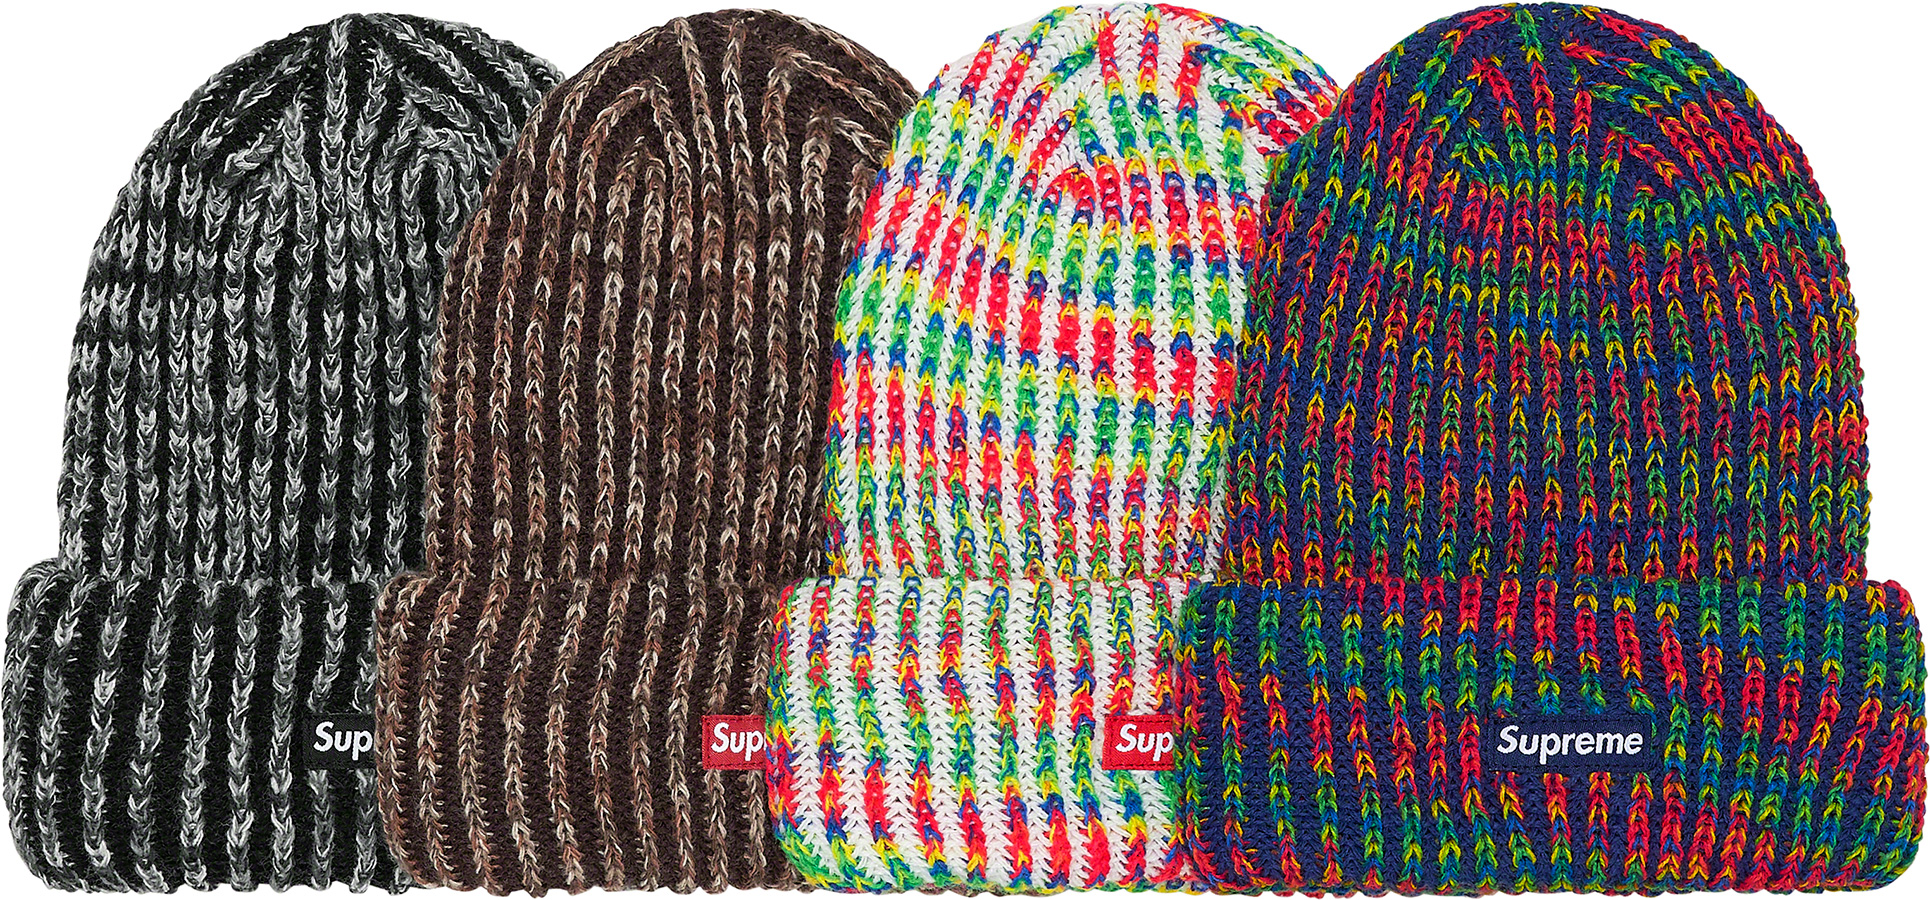 Supreme Rainbow knit Loose Gauge Beanie-